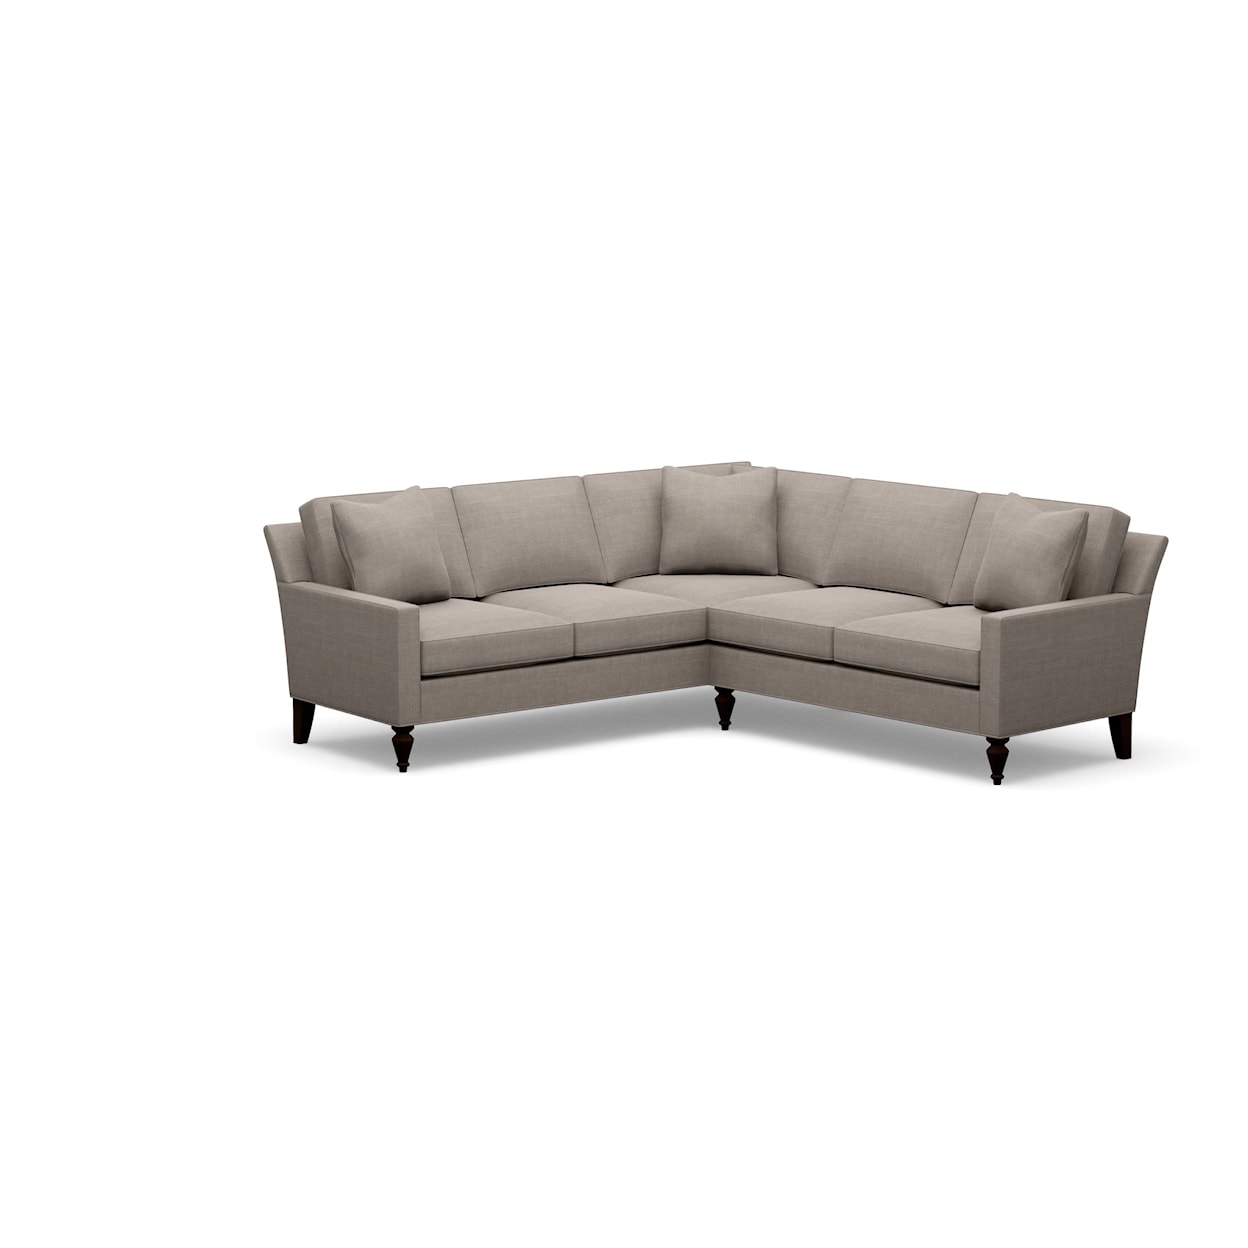 Century Leonardo 2-Piece L-Shaped Sectional Sofa